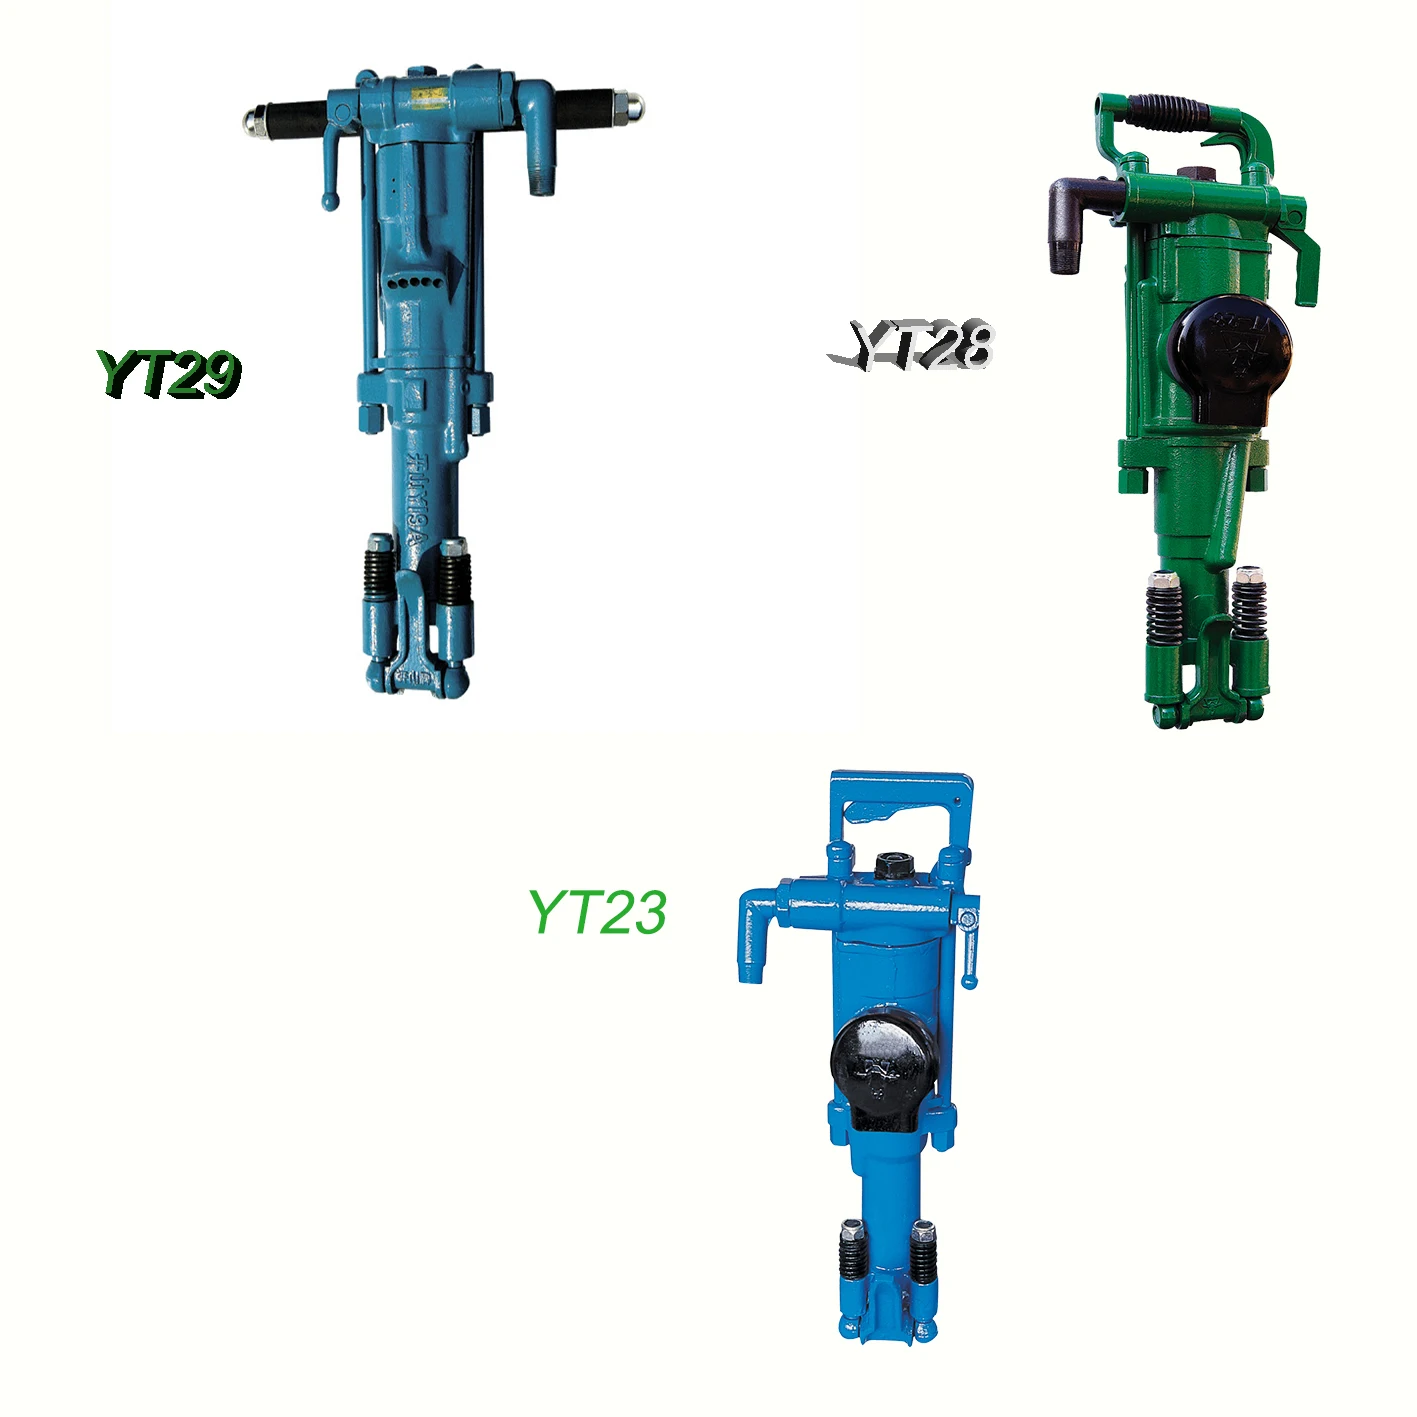 Kaishan brand YT28 High Quality Air Leg Top Jack hammer Pneumatic Rock Drill for Mining